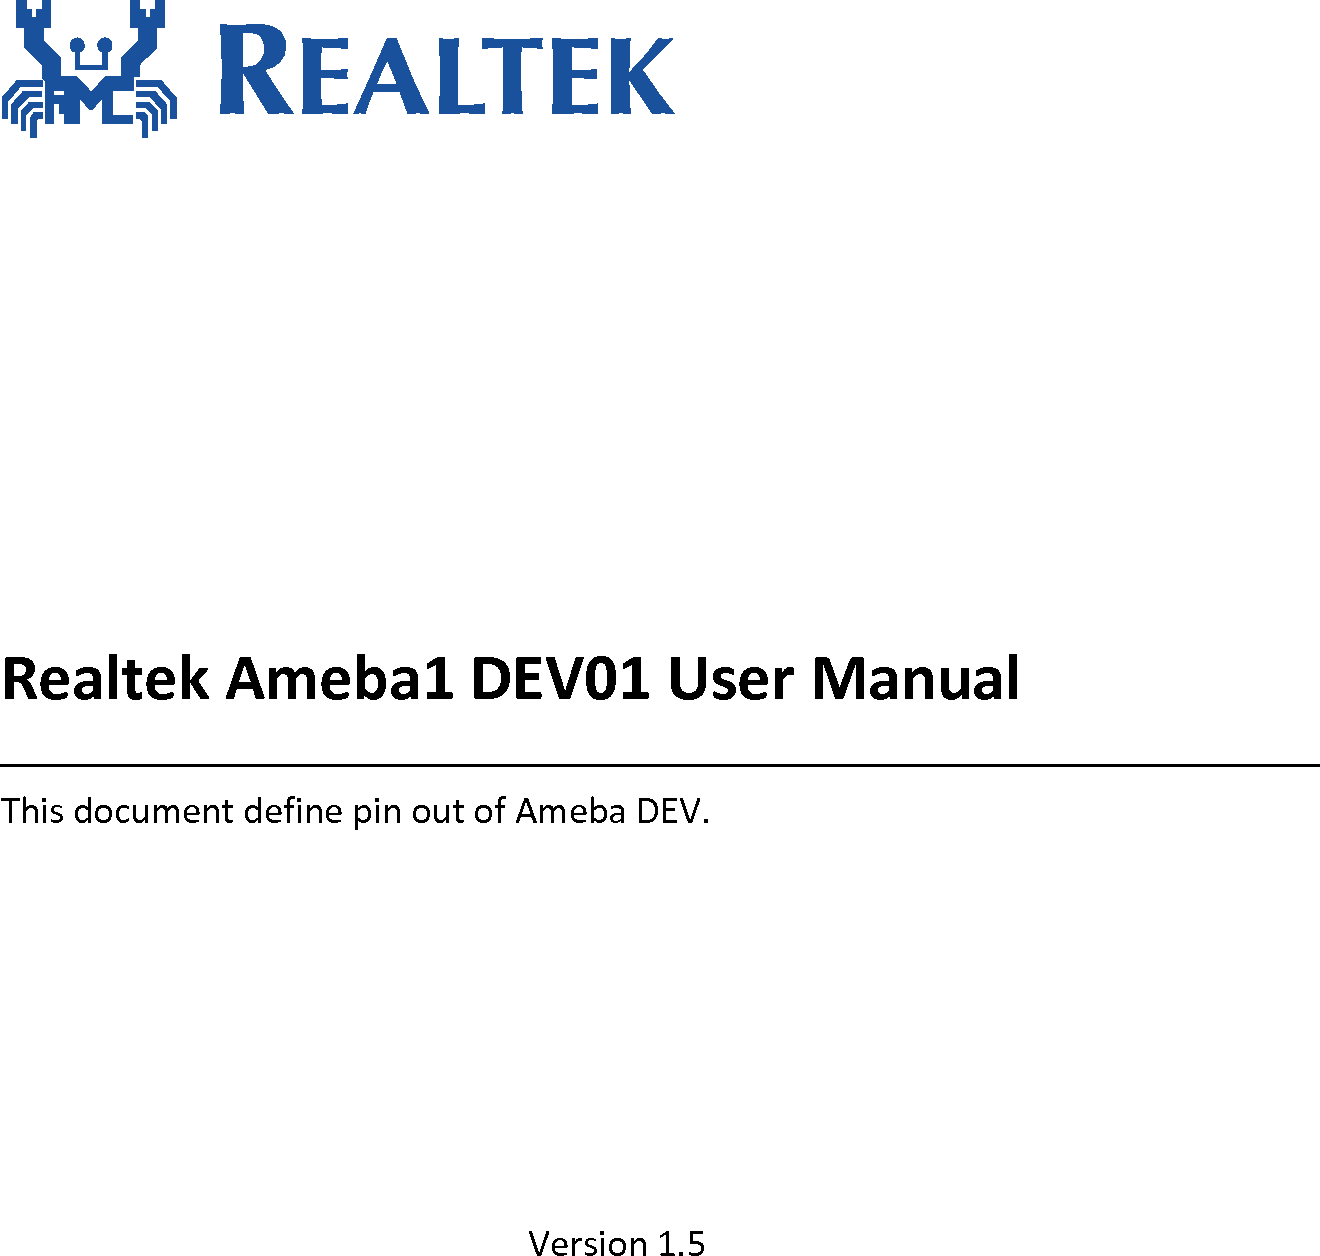    Realtek Ameba1 DEV01 User Manual This document define pin out of Ameba DEV. Version 1.5 